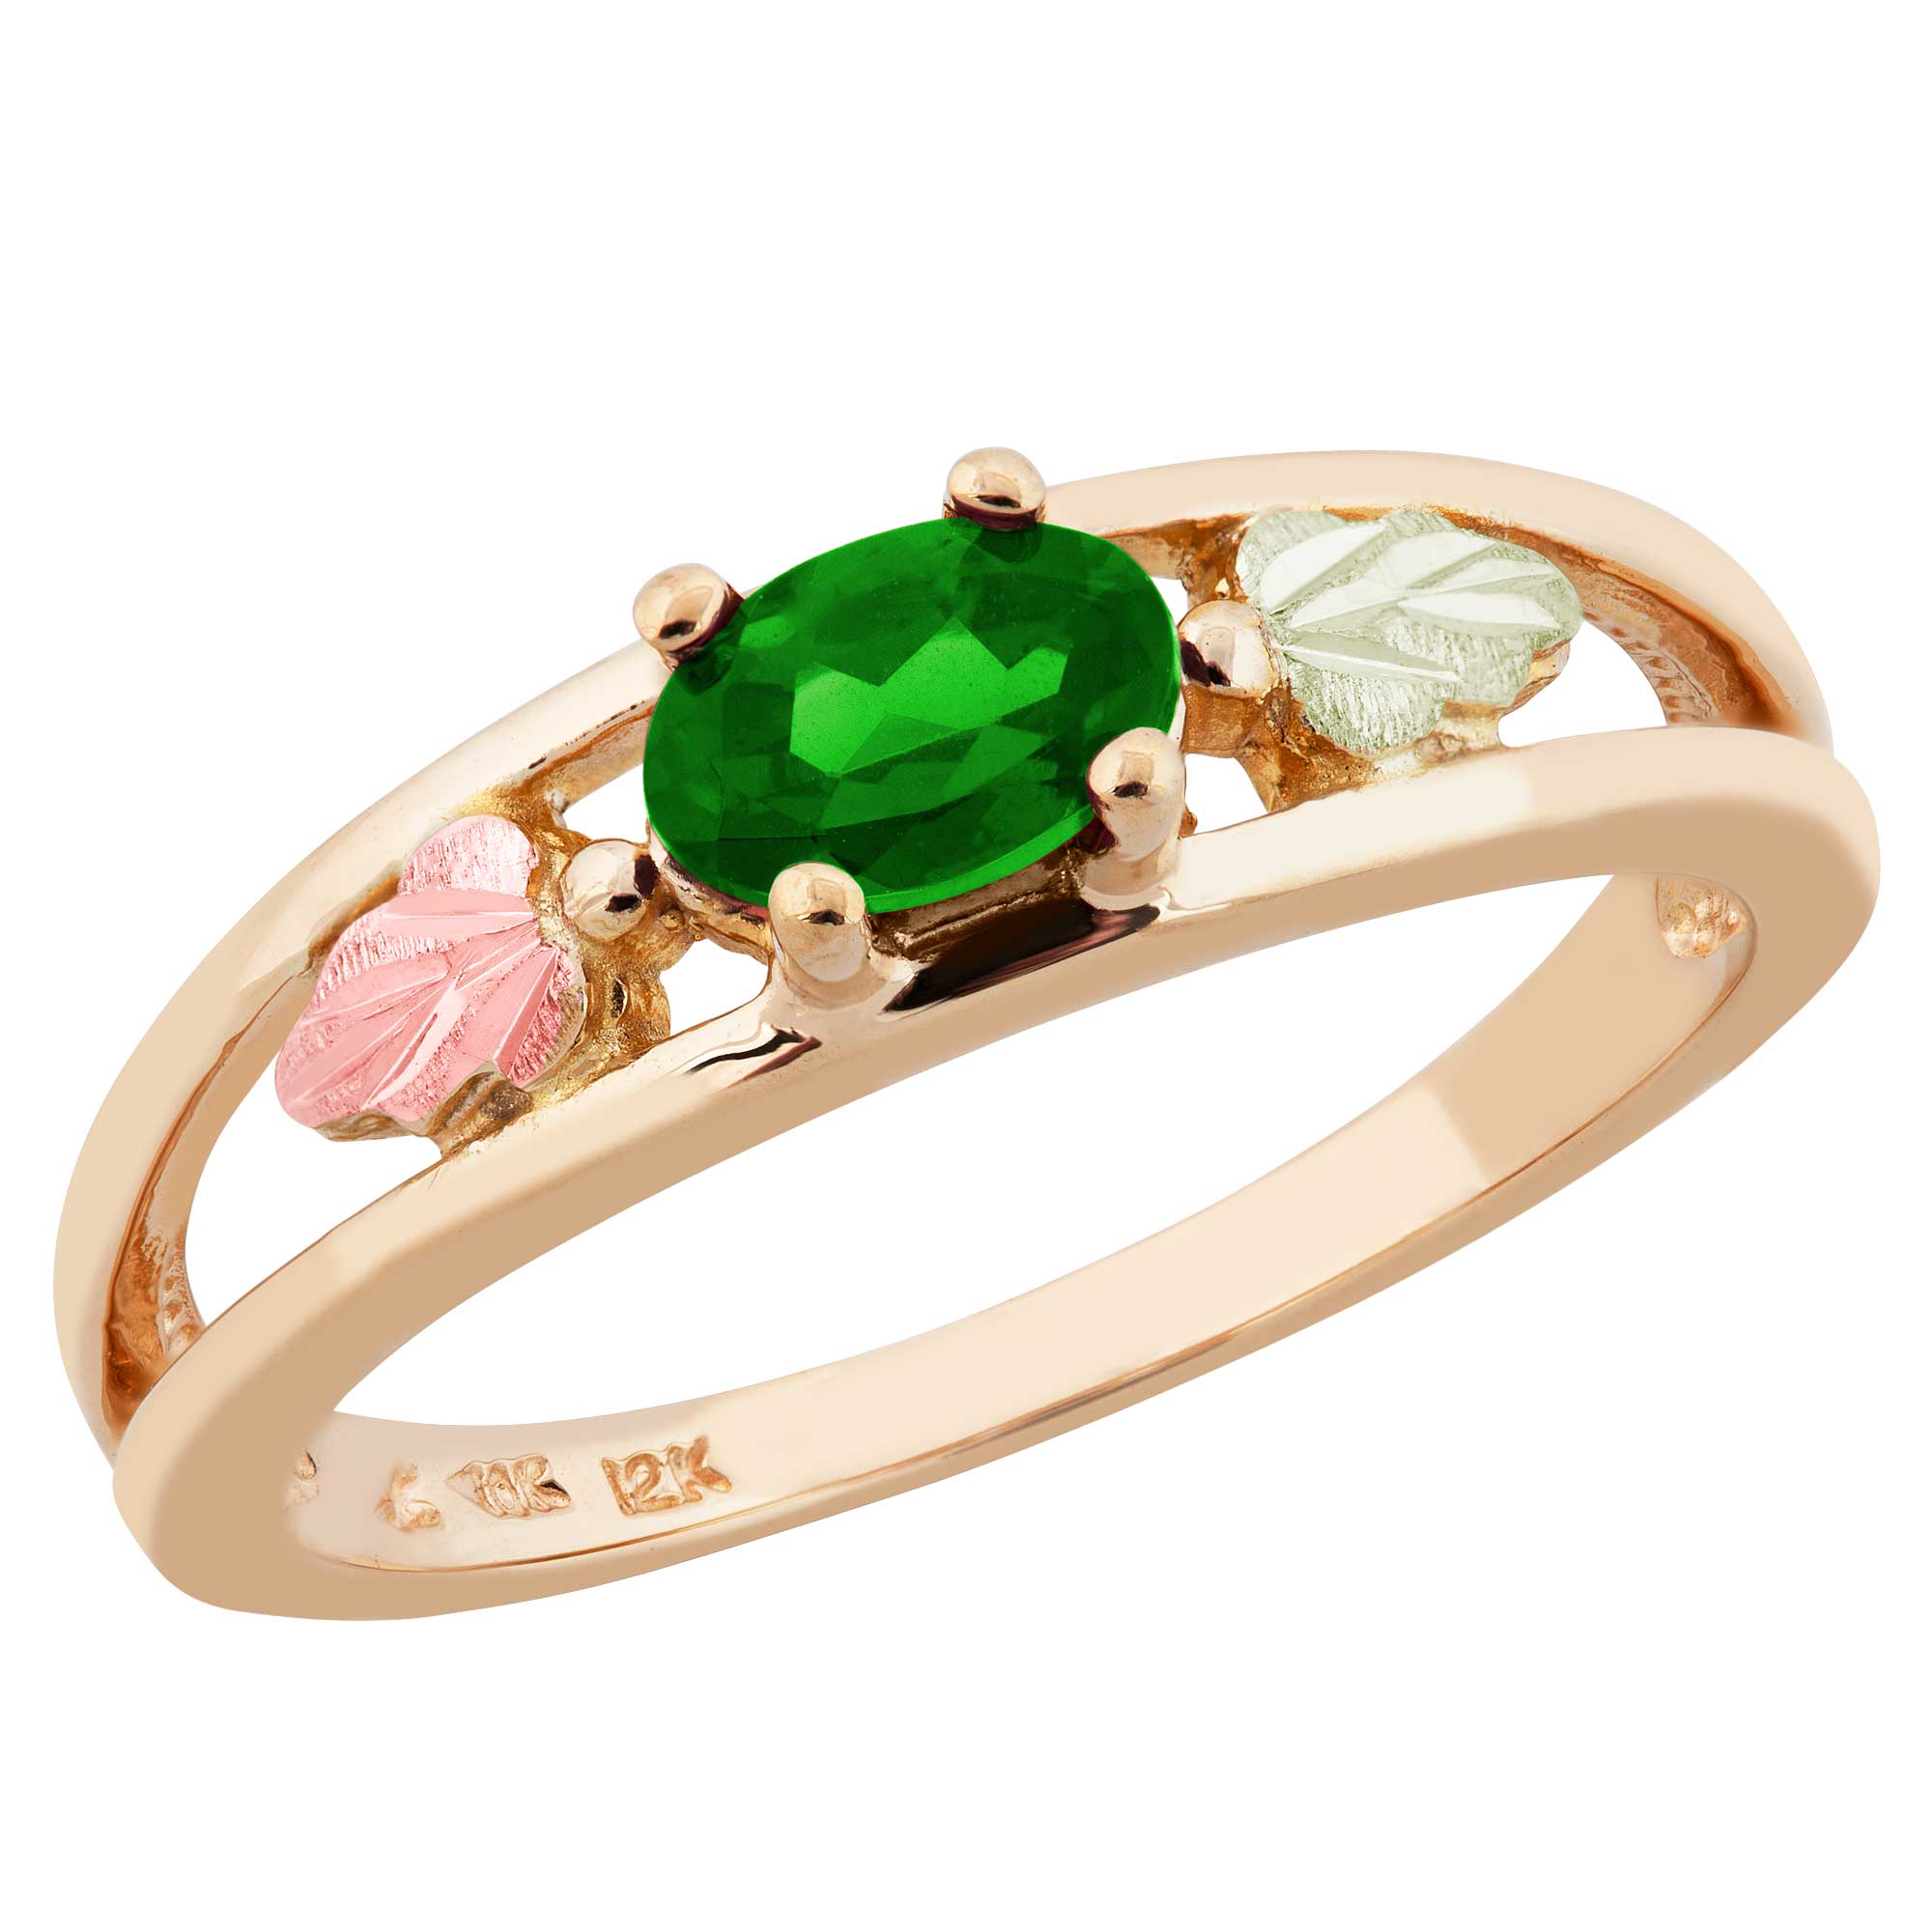 Emarald Gemstone Ring, 12k Green and Rose Gold Black Hills Gold Motif